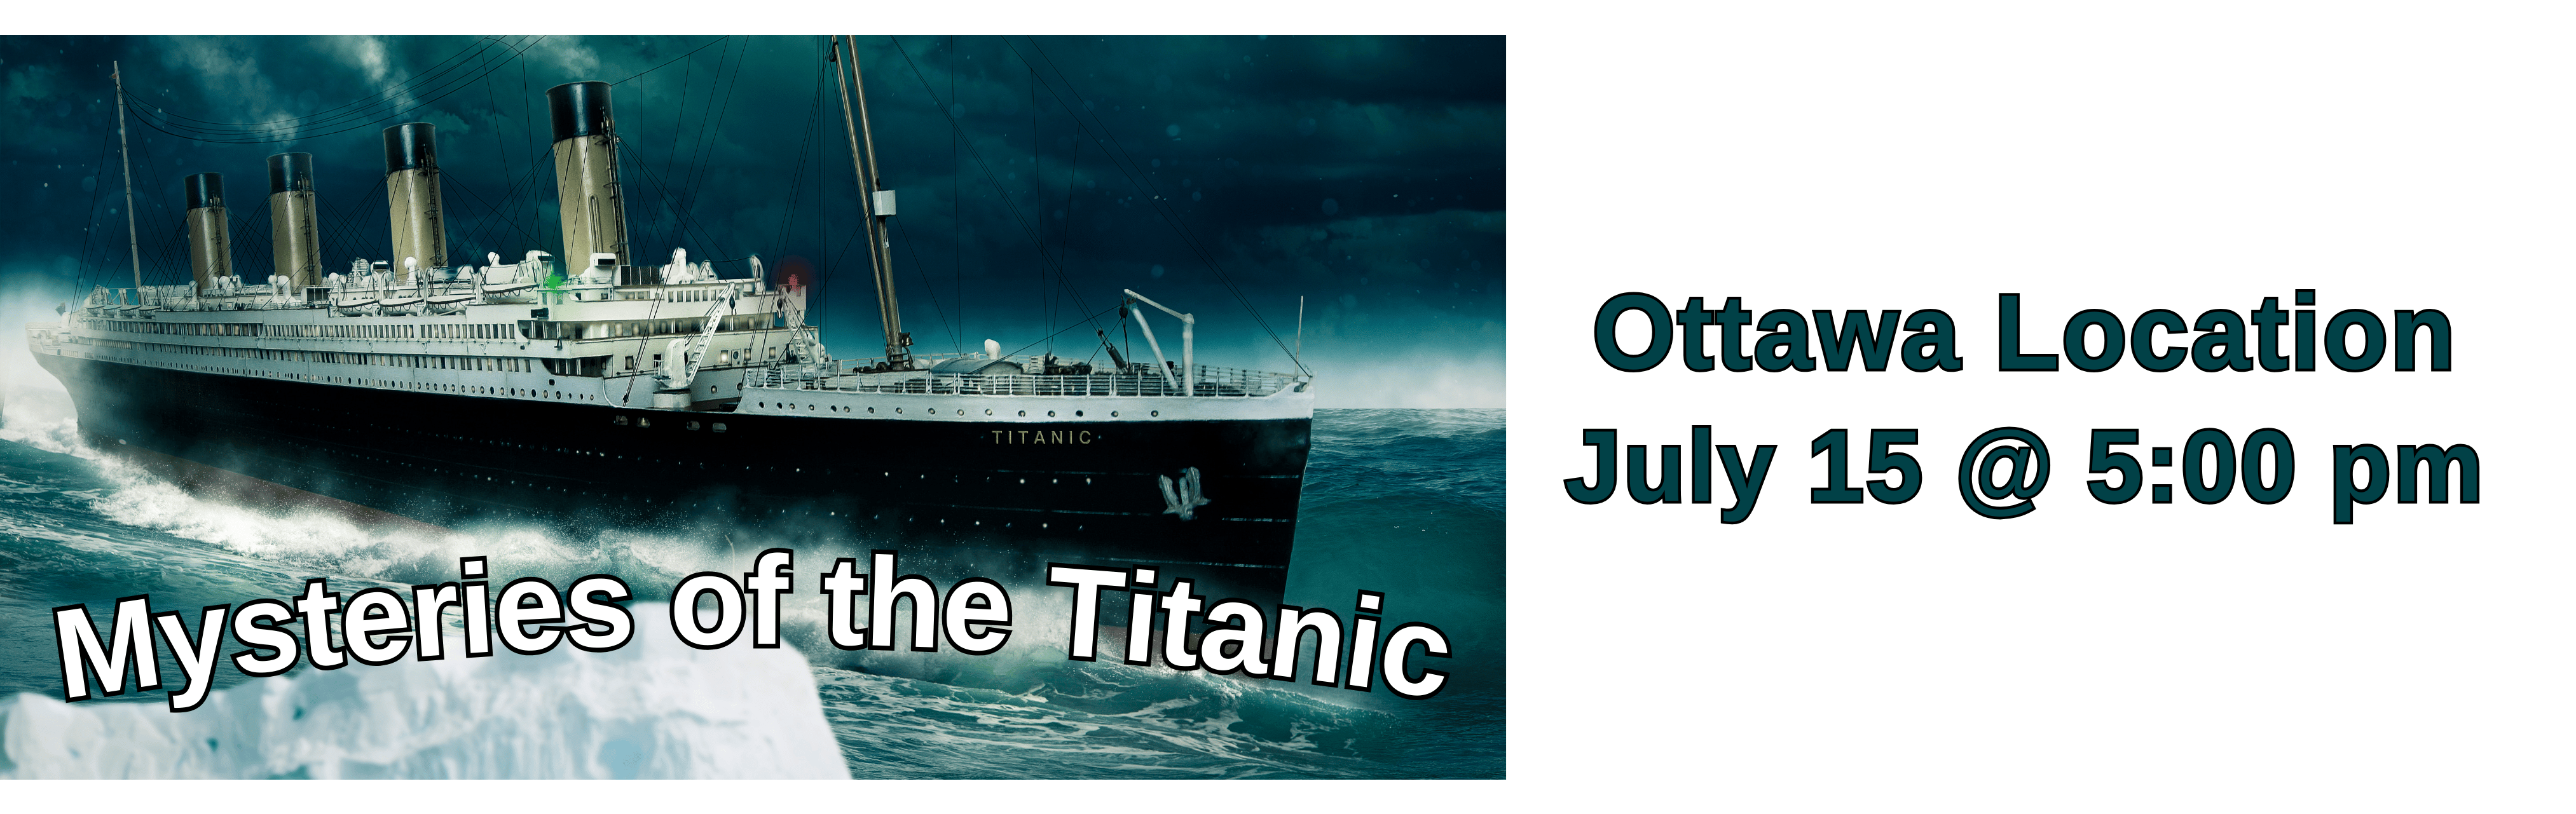 ship Mysteries of the Titanic Ottawa Location July 15  5 pm